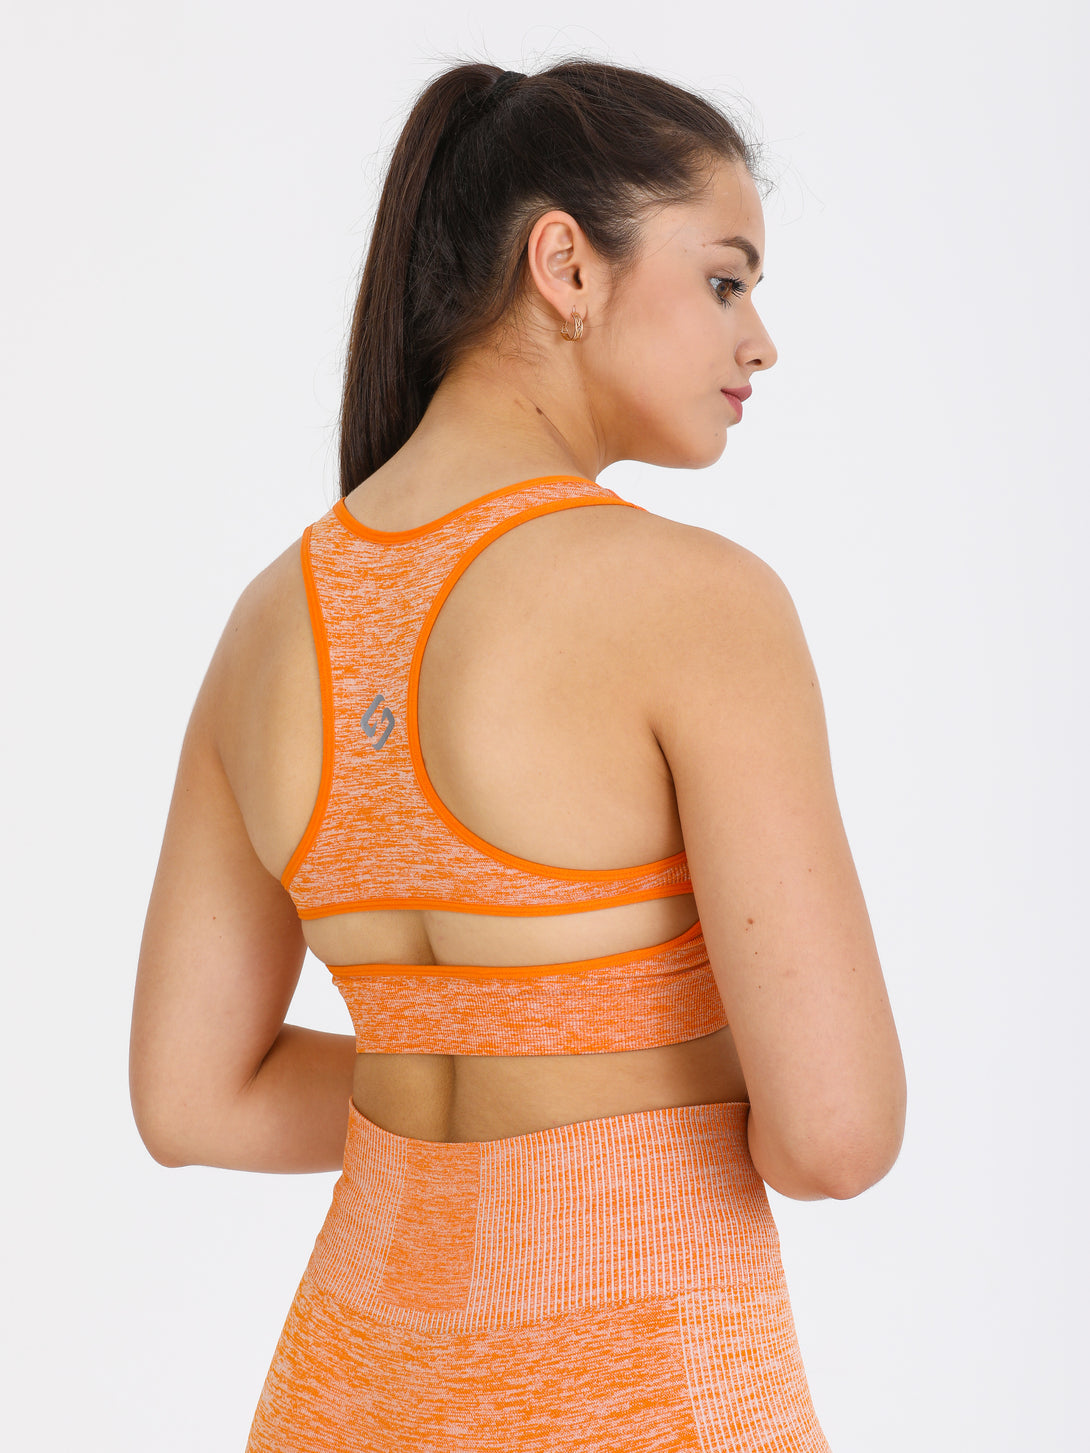 A Woman Wearing Orange Color Seamless Medium Support Sports Bra